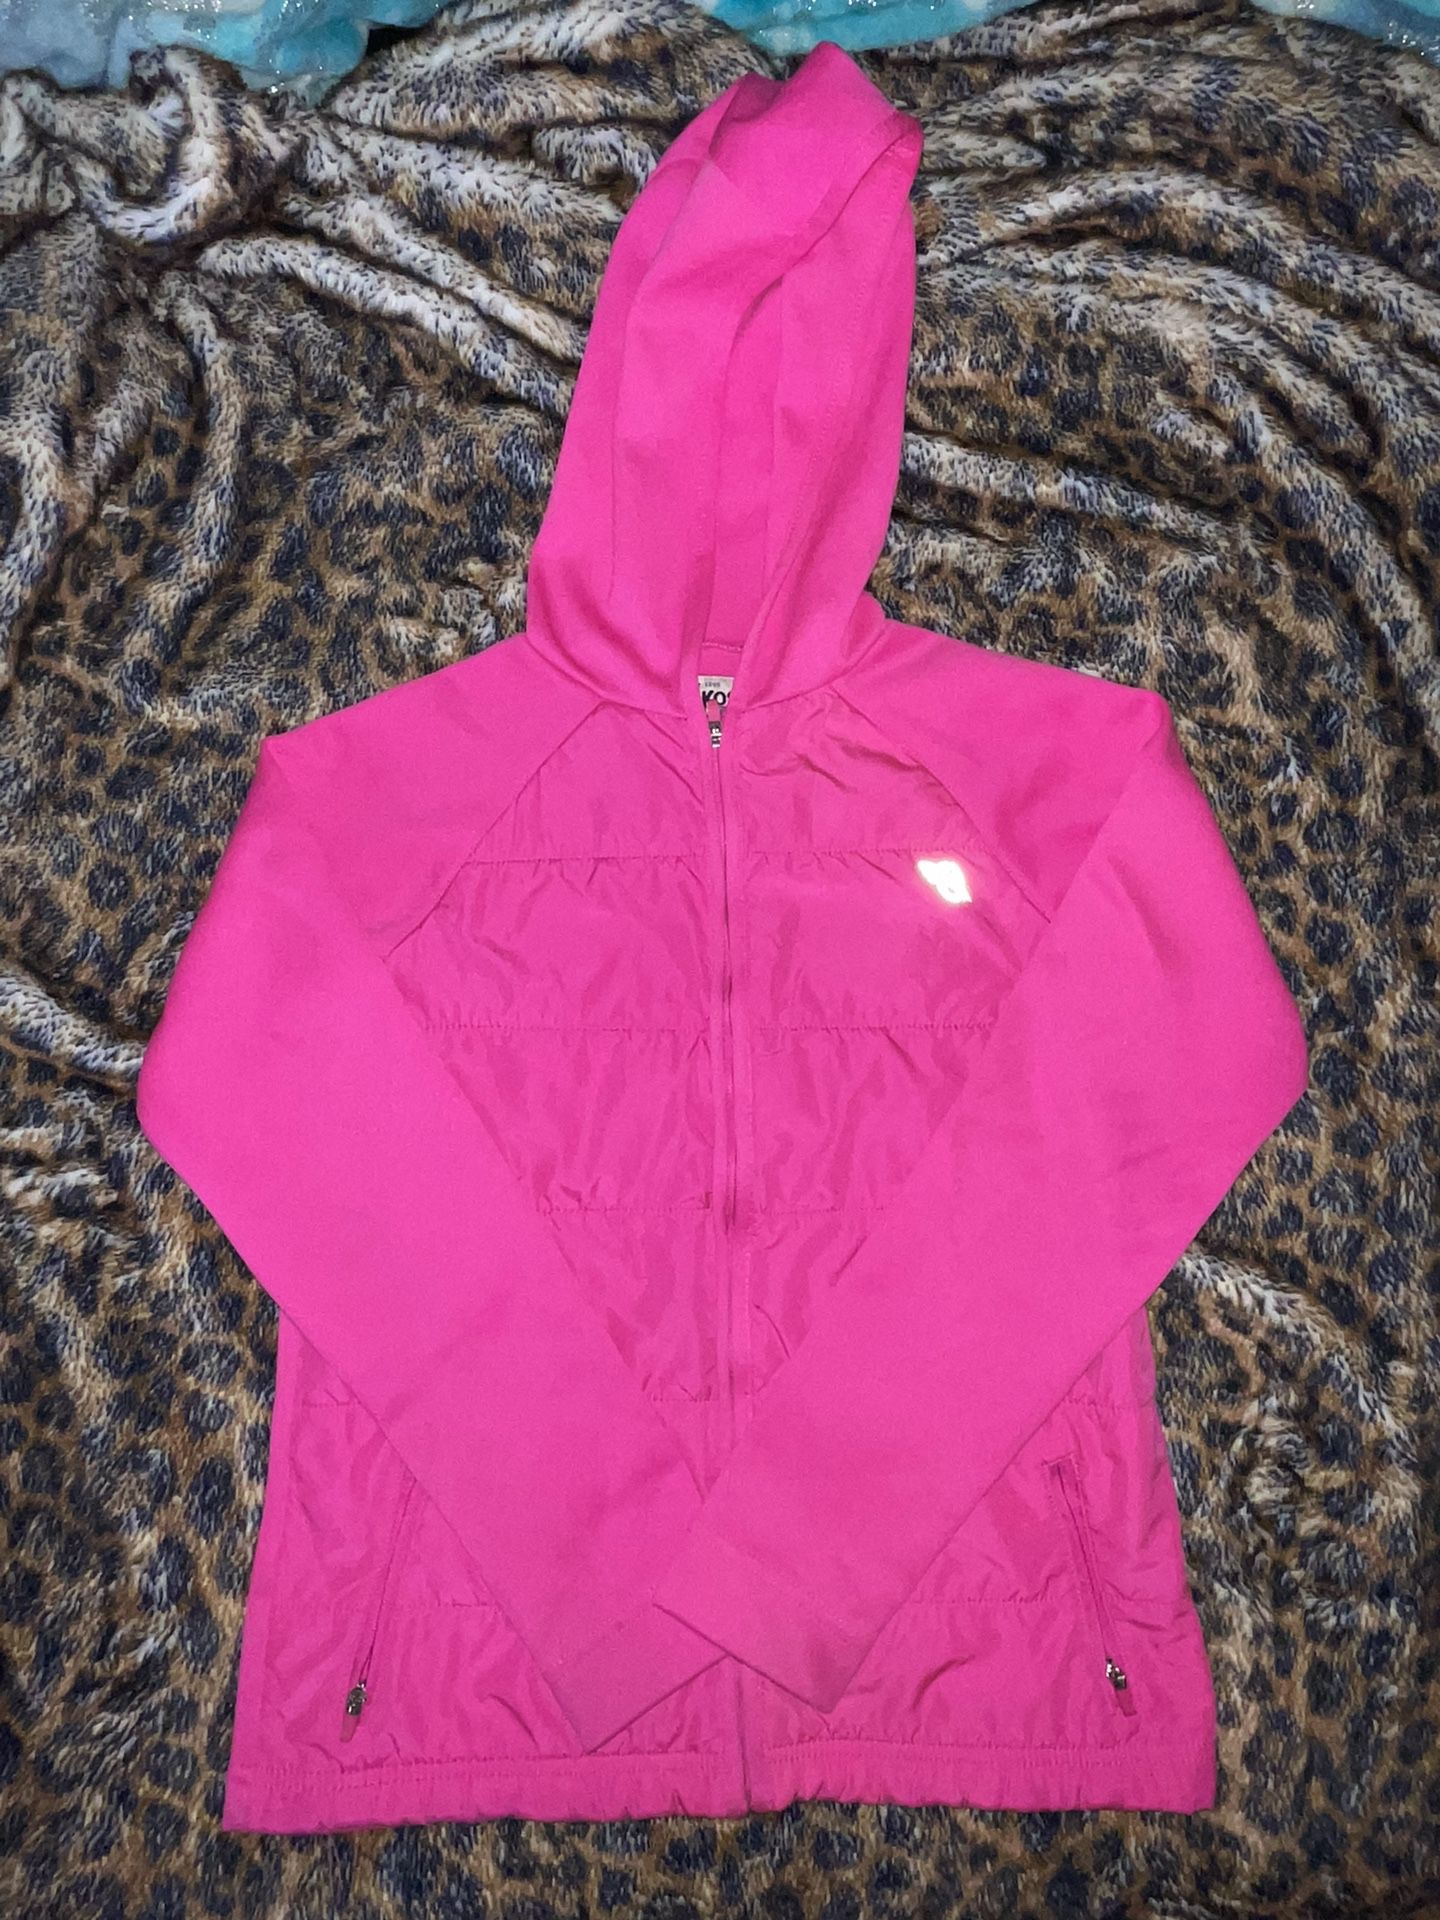 OshKosh B’gosh  Girls Pink Jacket Size 14